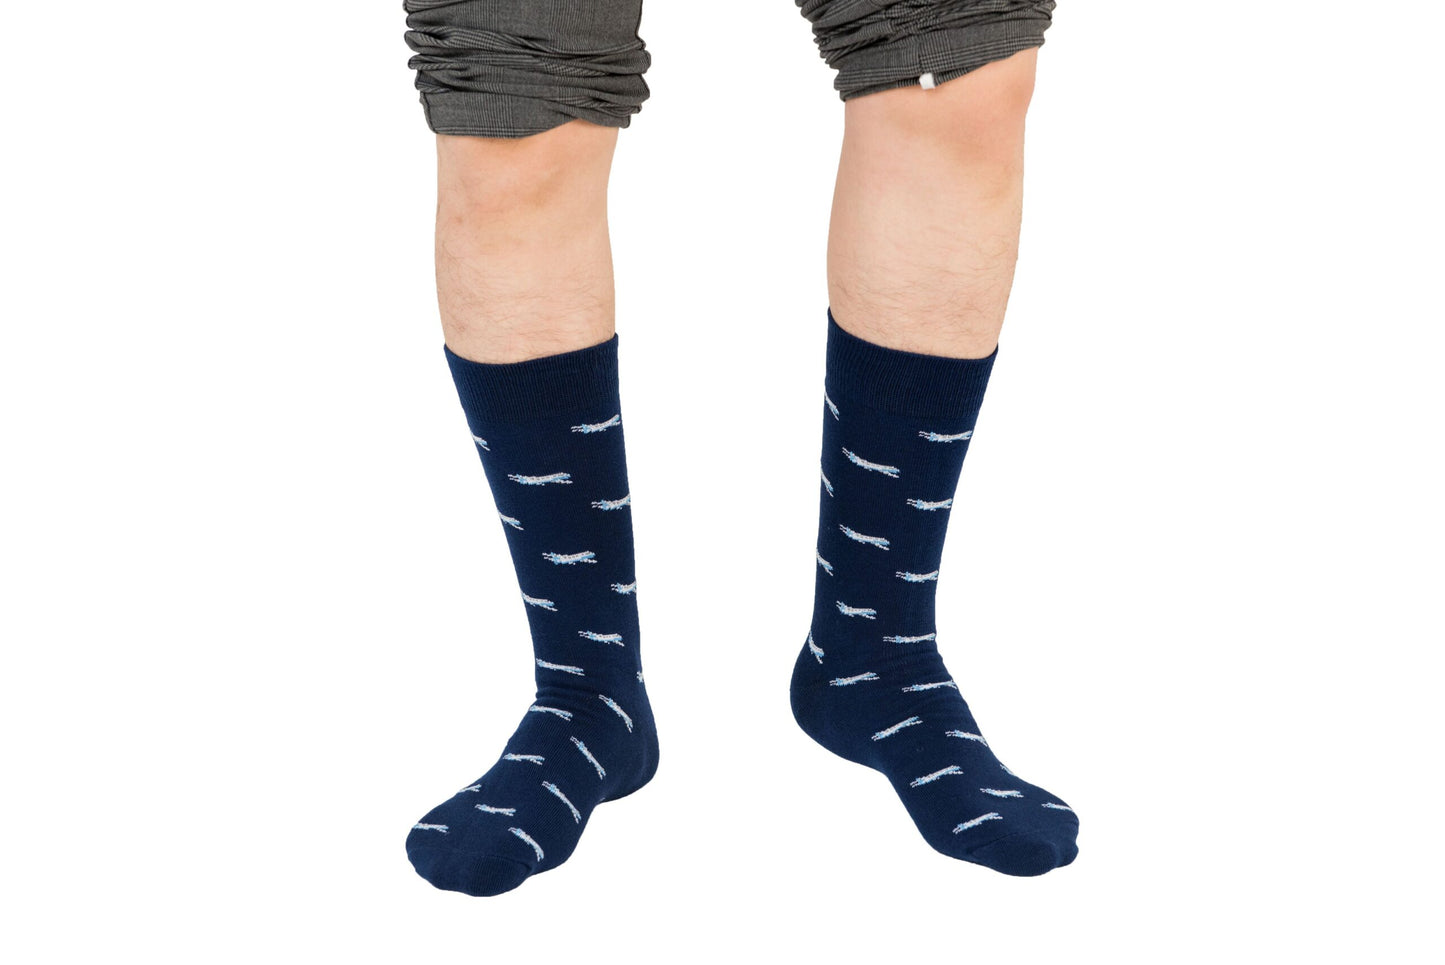 A person wearing Aeroplane Socks.